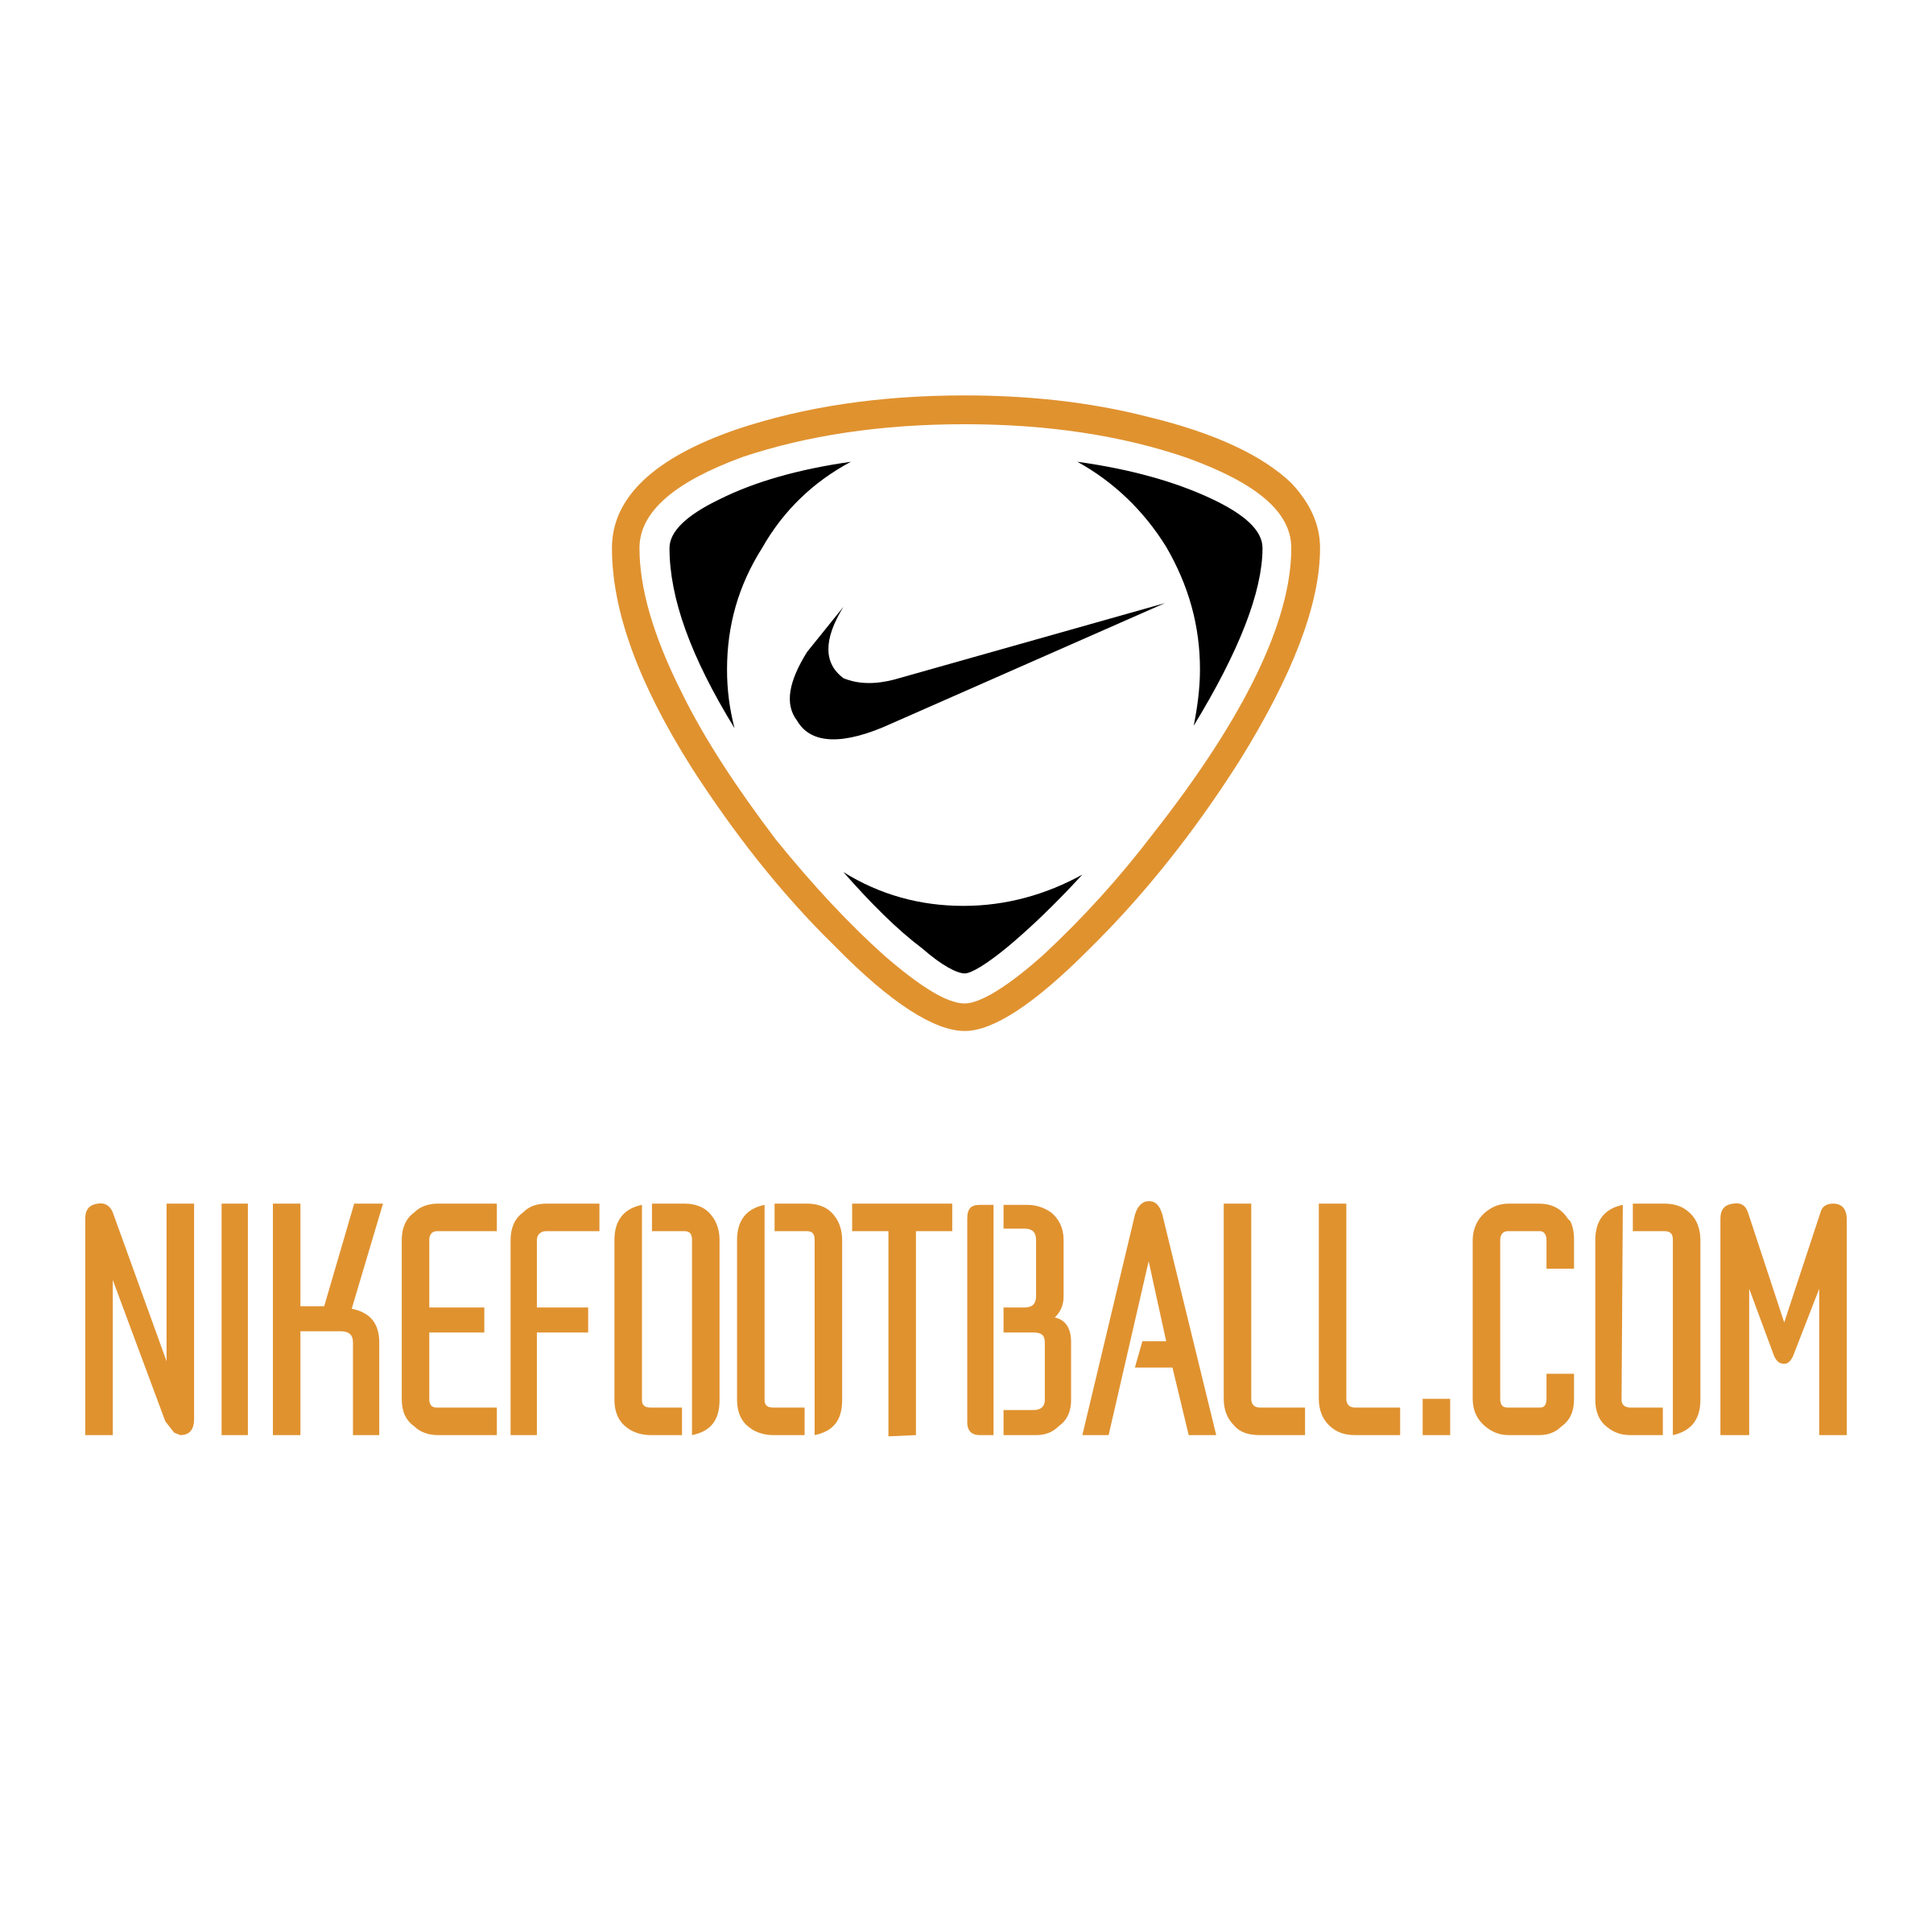 Nike Football Vector at Vectorified.com | Collection of Nike Football ...
